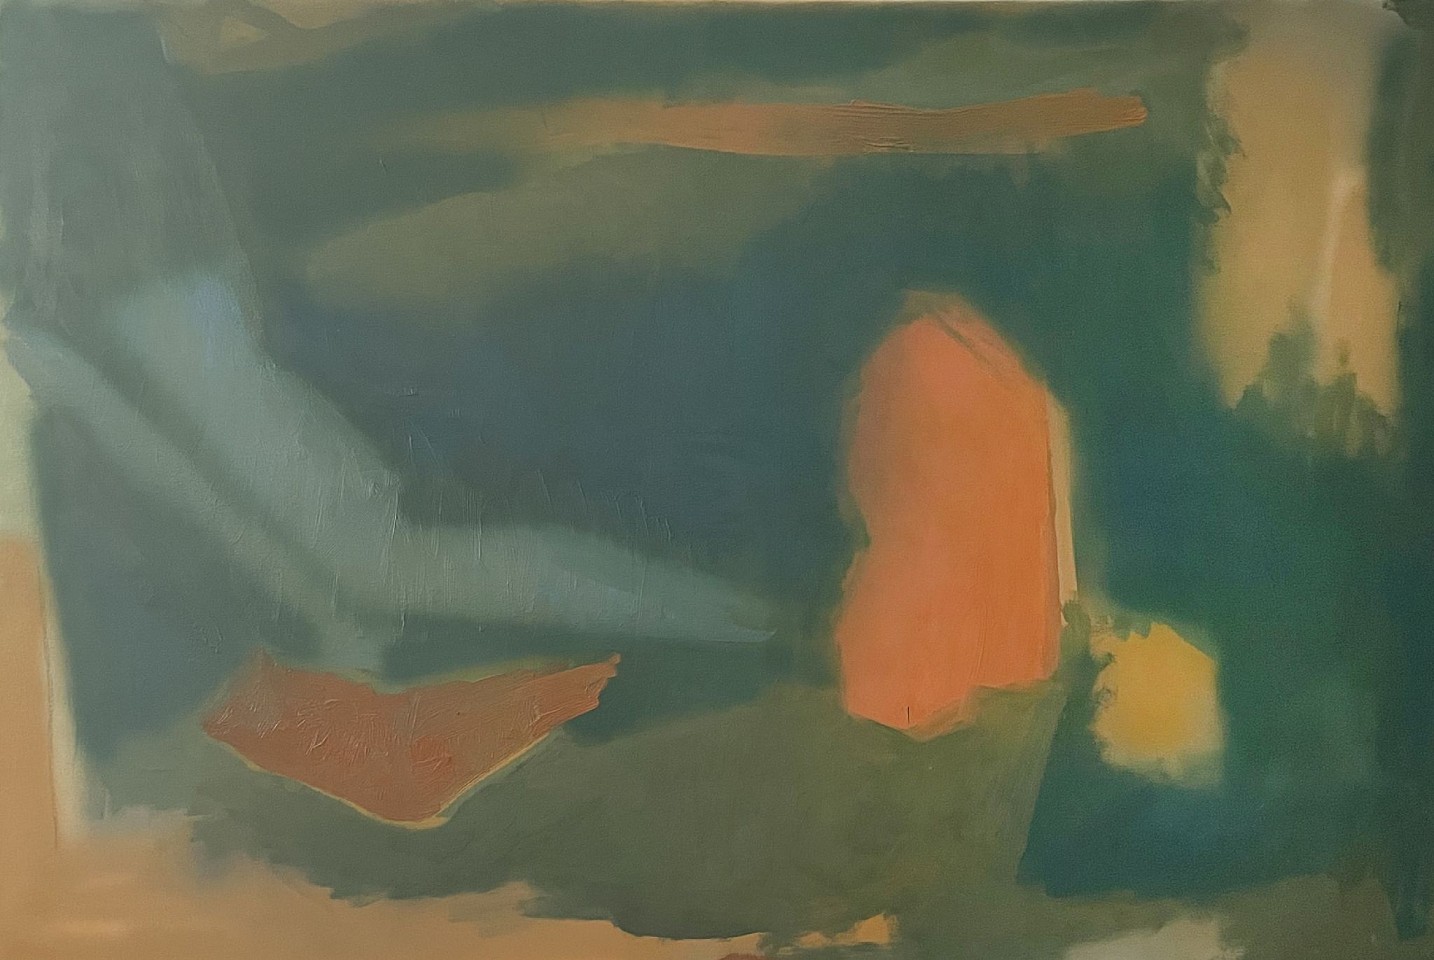 Esteban Vicente, Ariel, 1990
Oil on Canvas, 44 x 66 in.
VICE00003